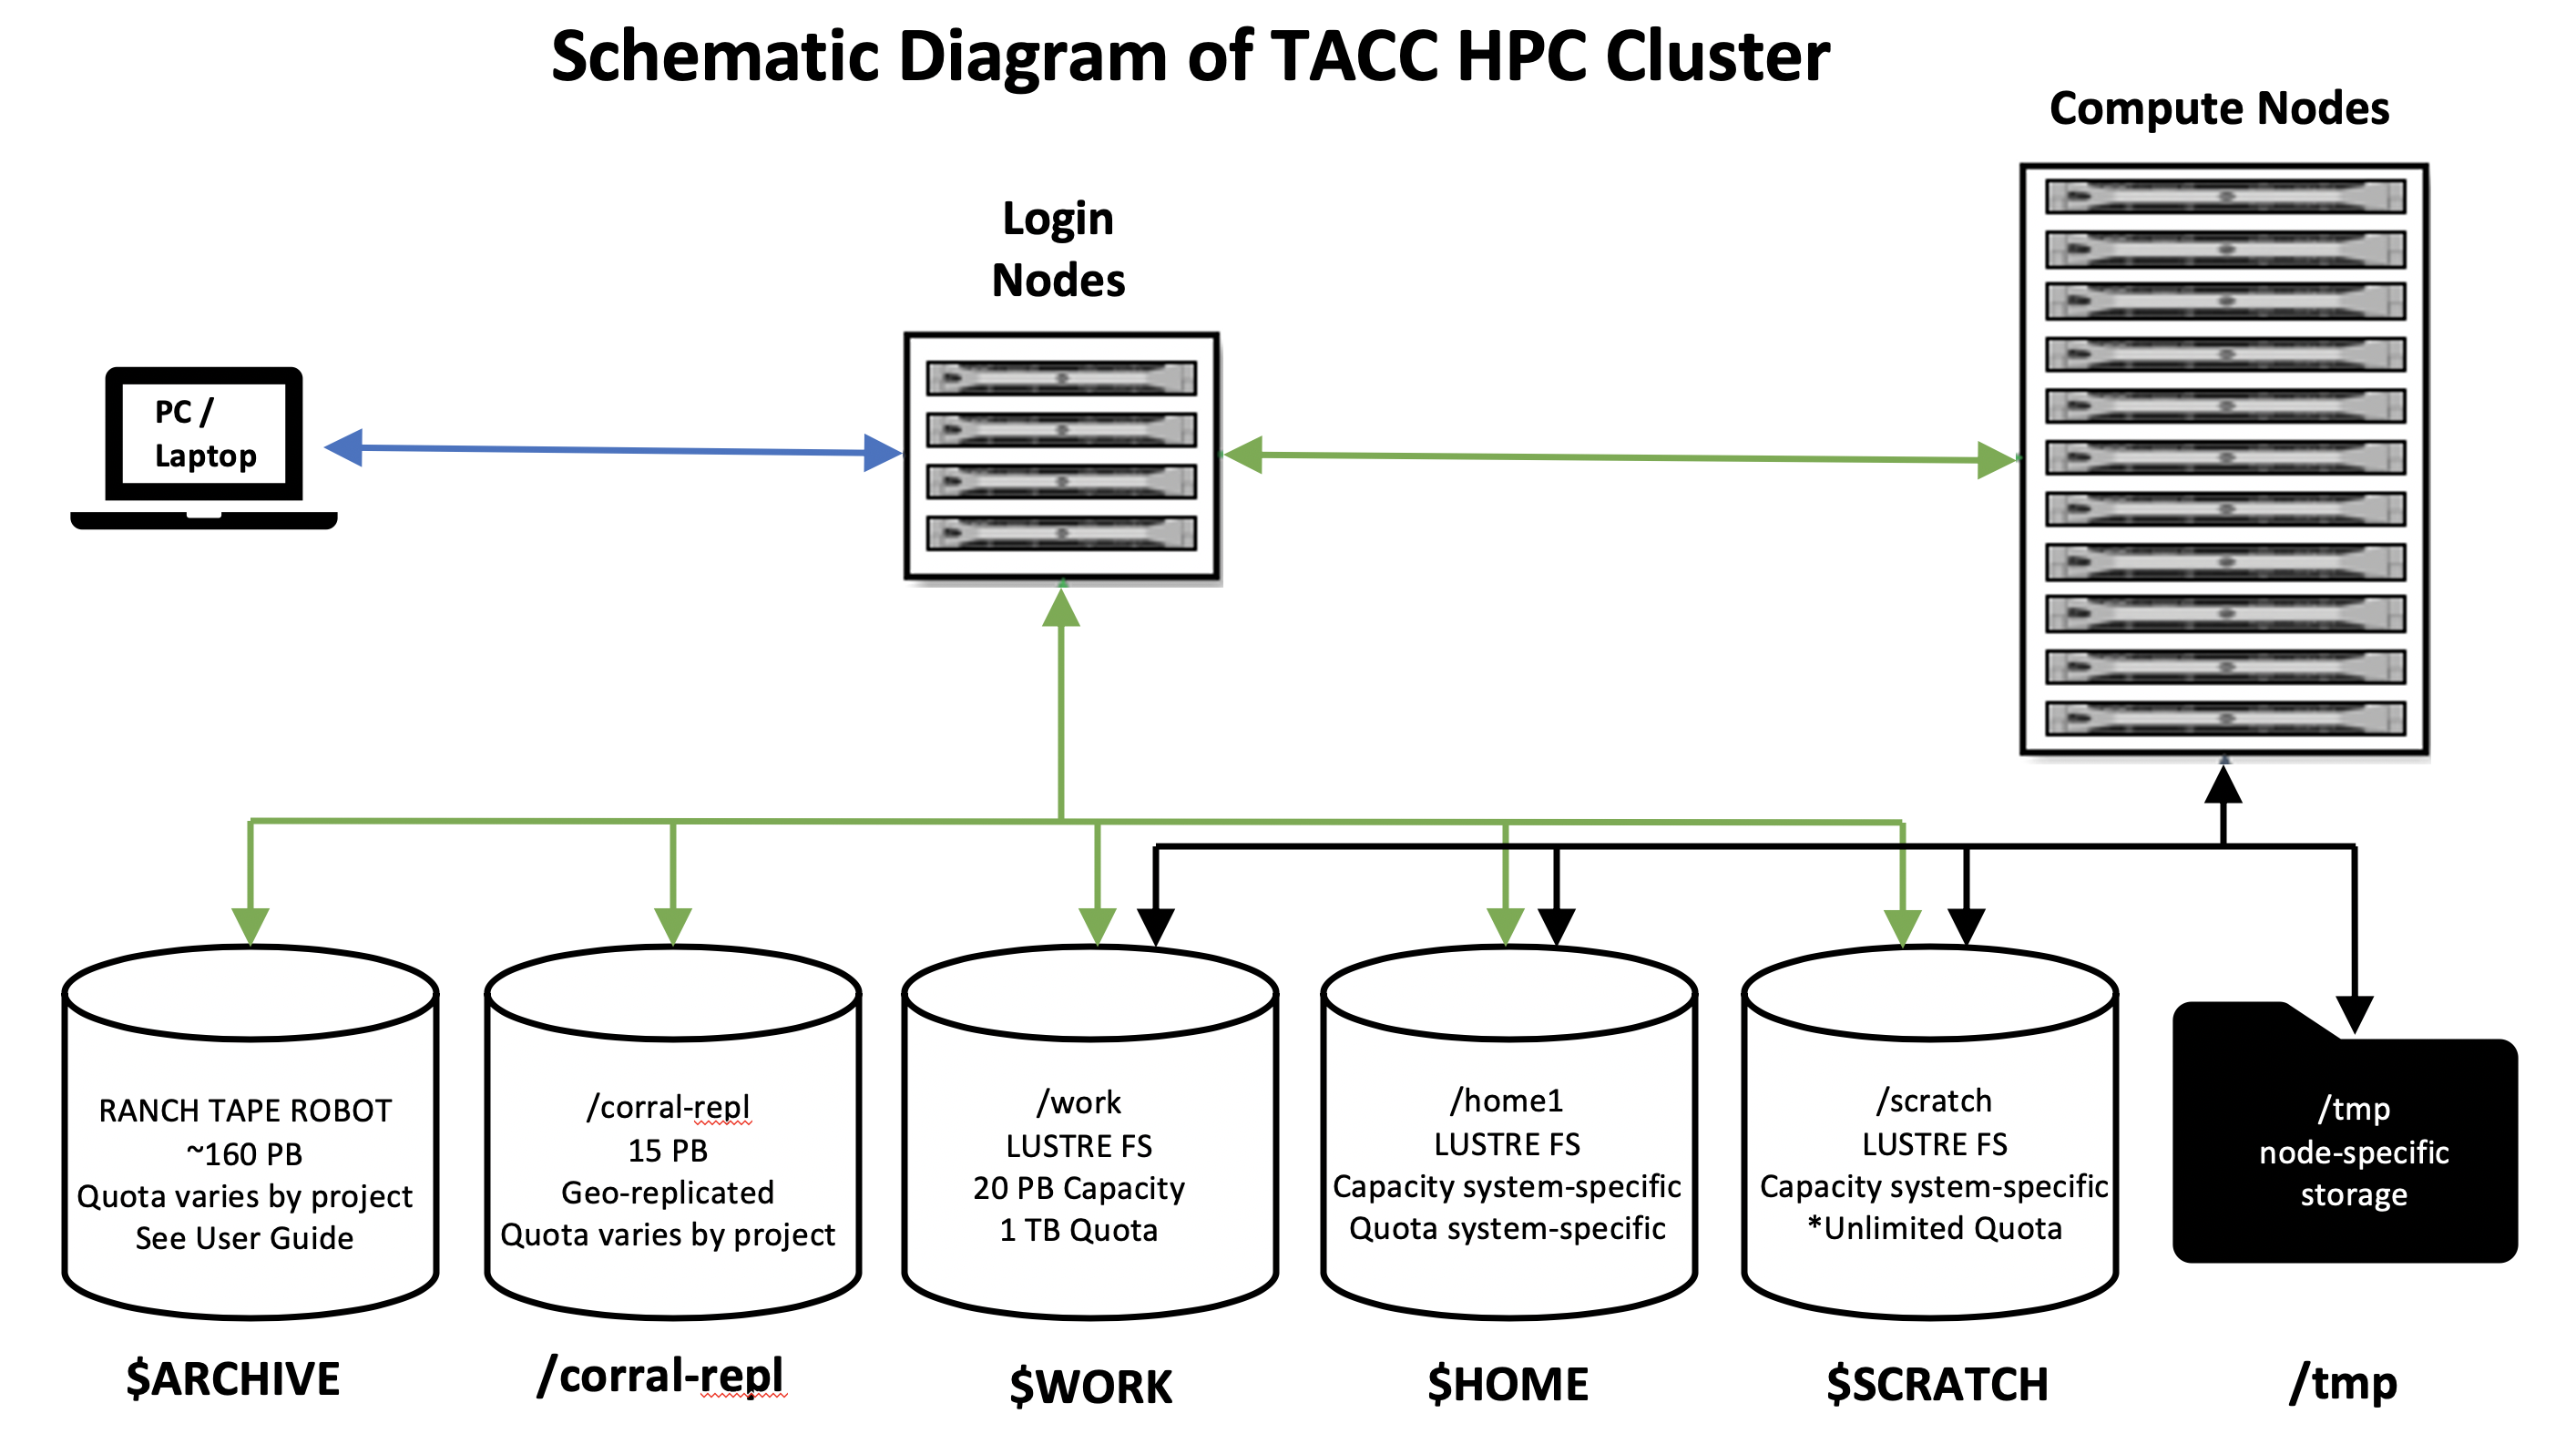 Schematic Diagram of TACC HPC Cluster